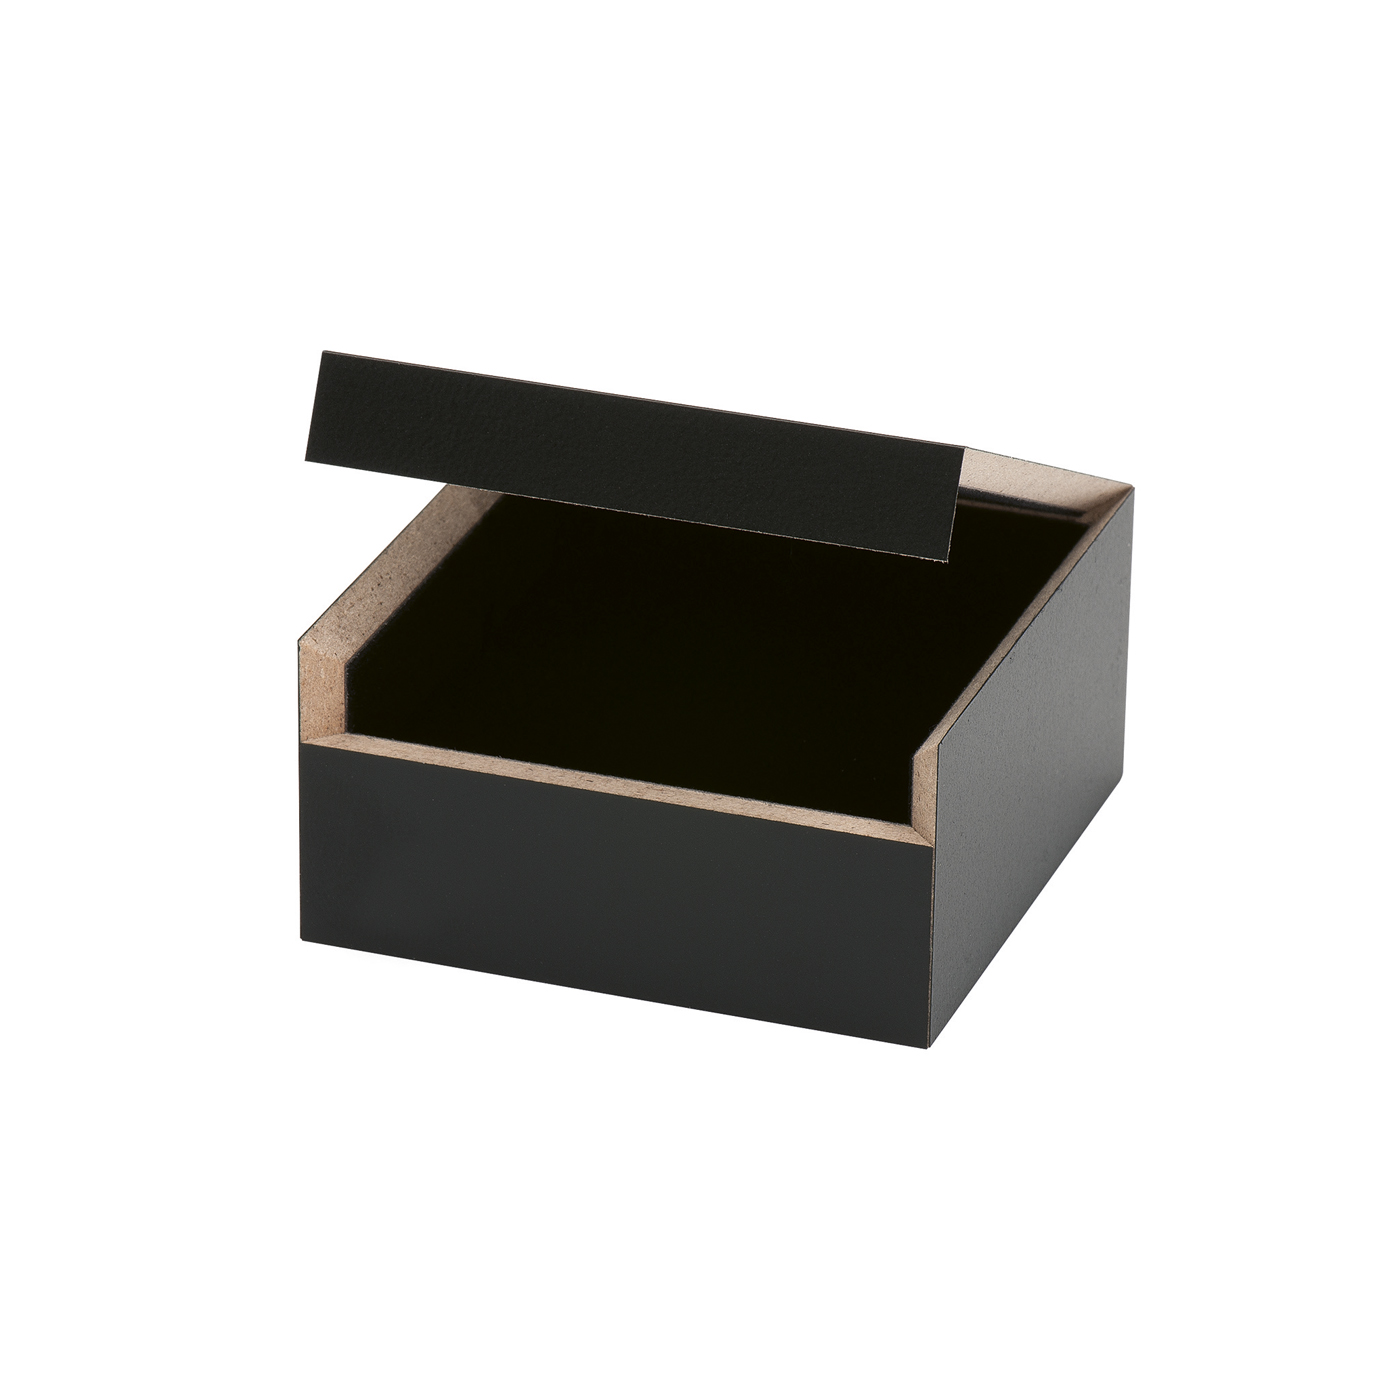 Jewellery Packaging "Blackbox", 60 x 60 x 30 mm - 1 piece